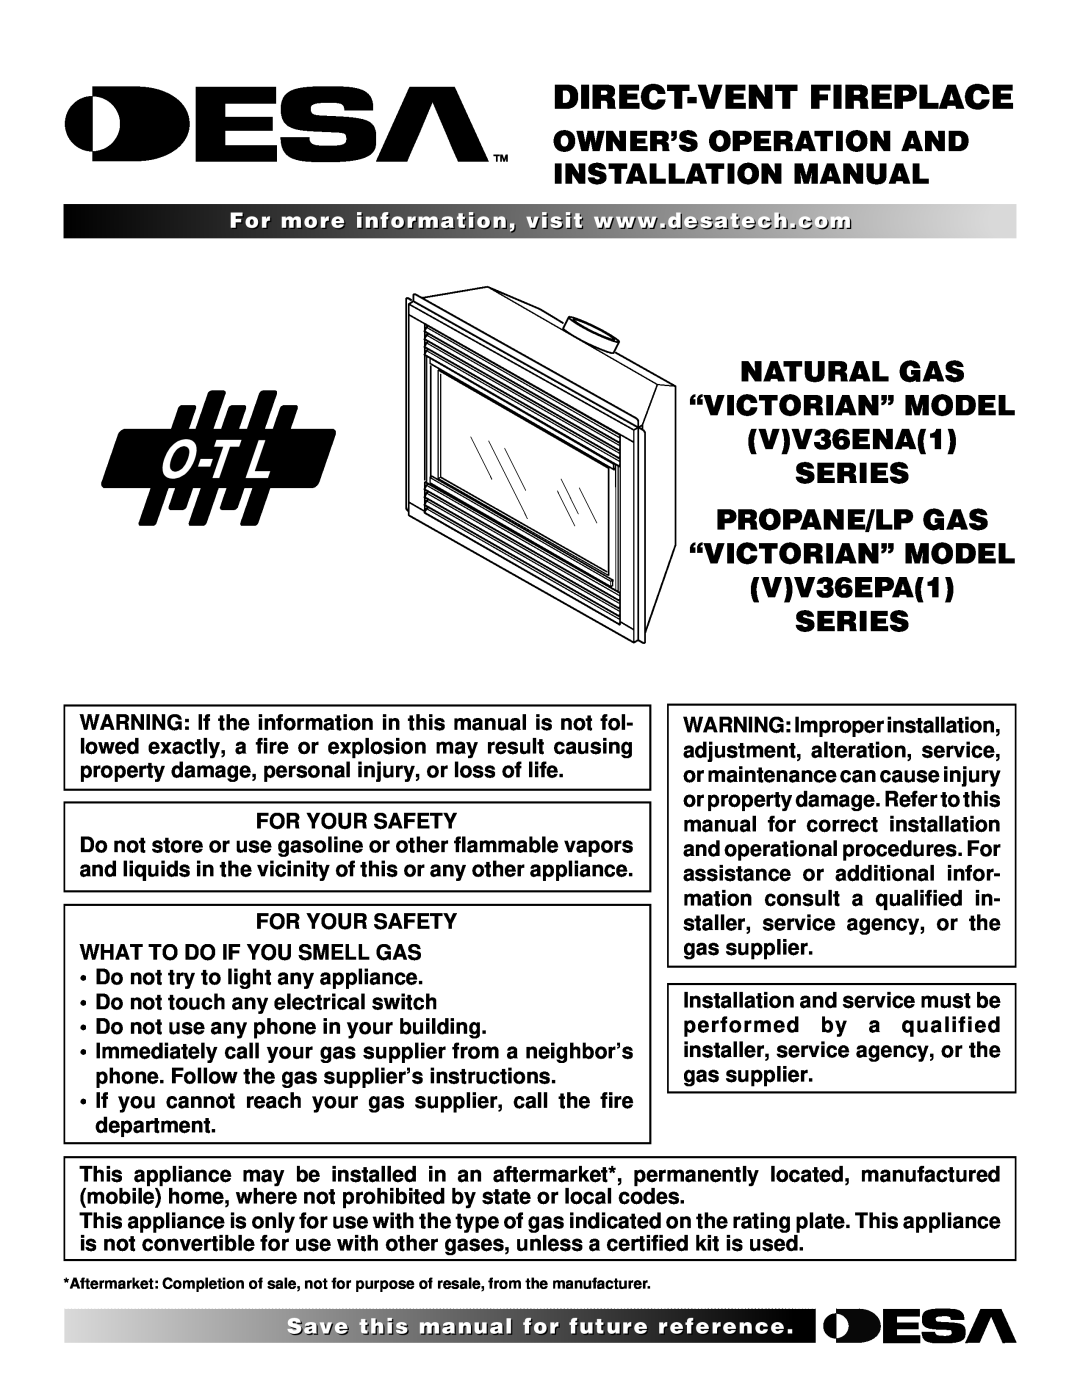 Desa (V)V36EPA(1) installation manual Owner’S Operation And Installation Manual, For Your Safety, Direct-Ventfireplace 